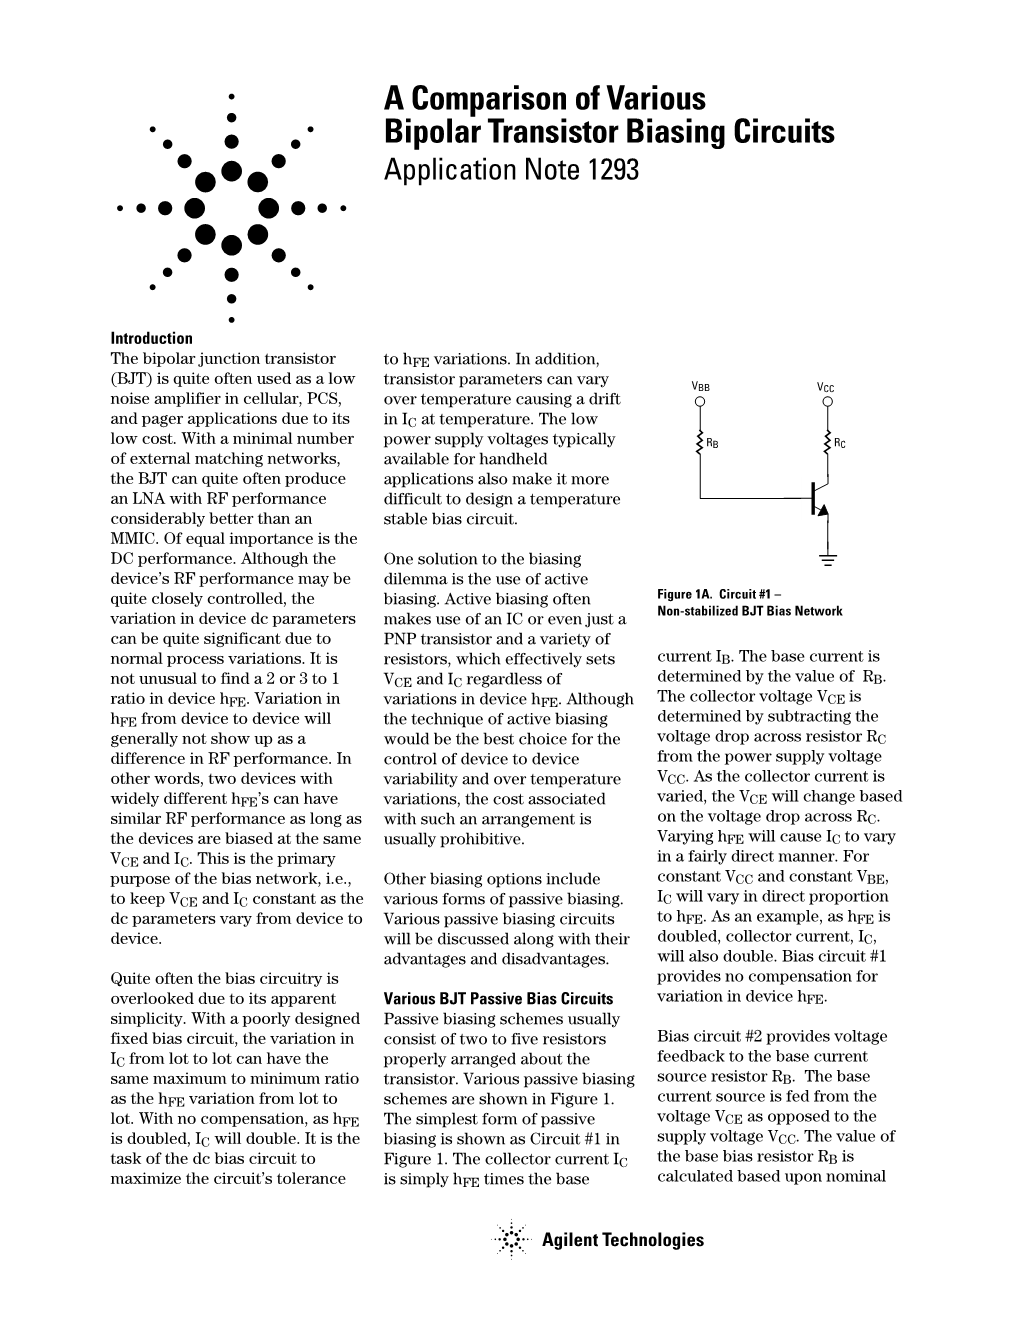 A Comparison of Various Bipolar Transistor Biasing Circuits Application Note 1293